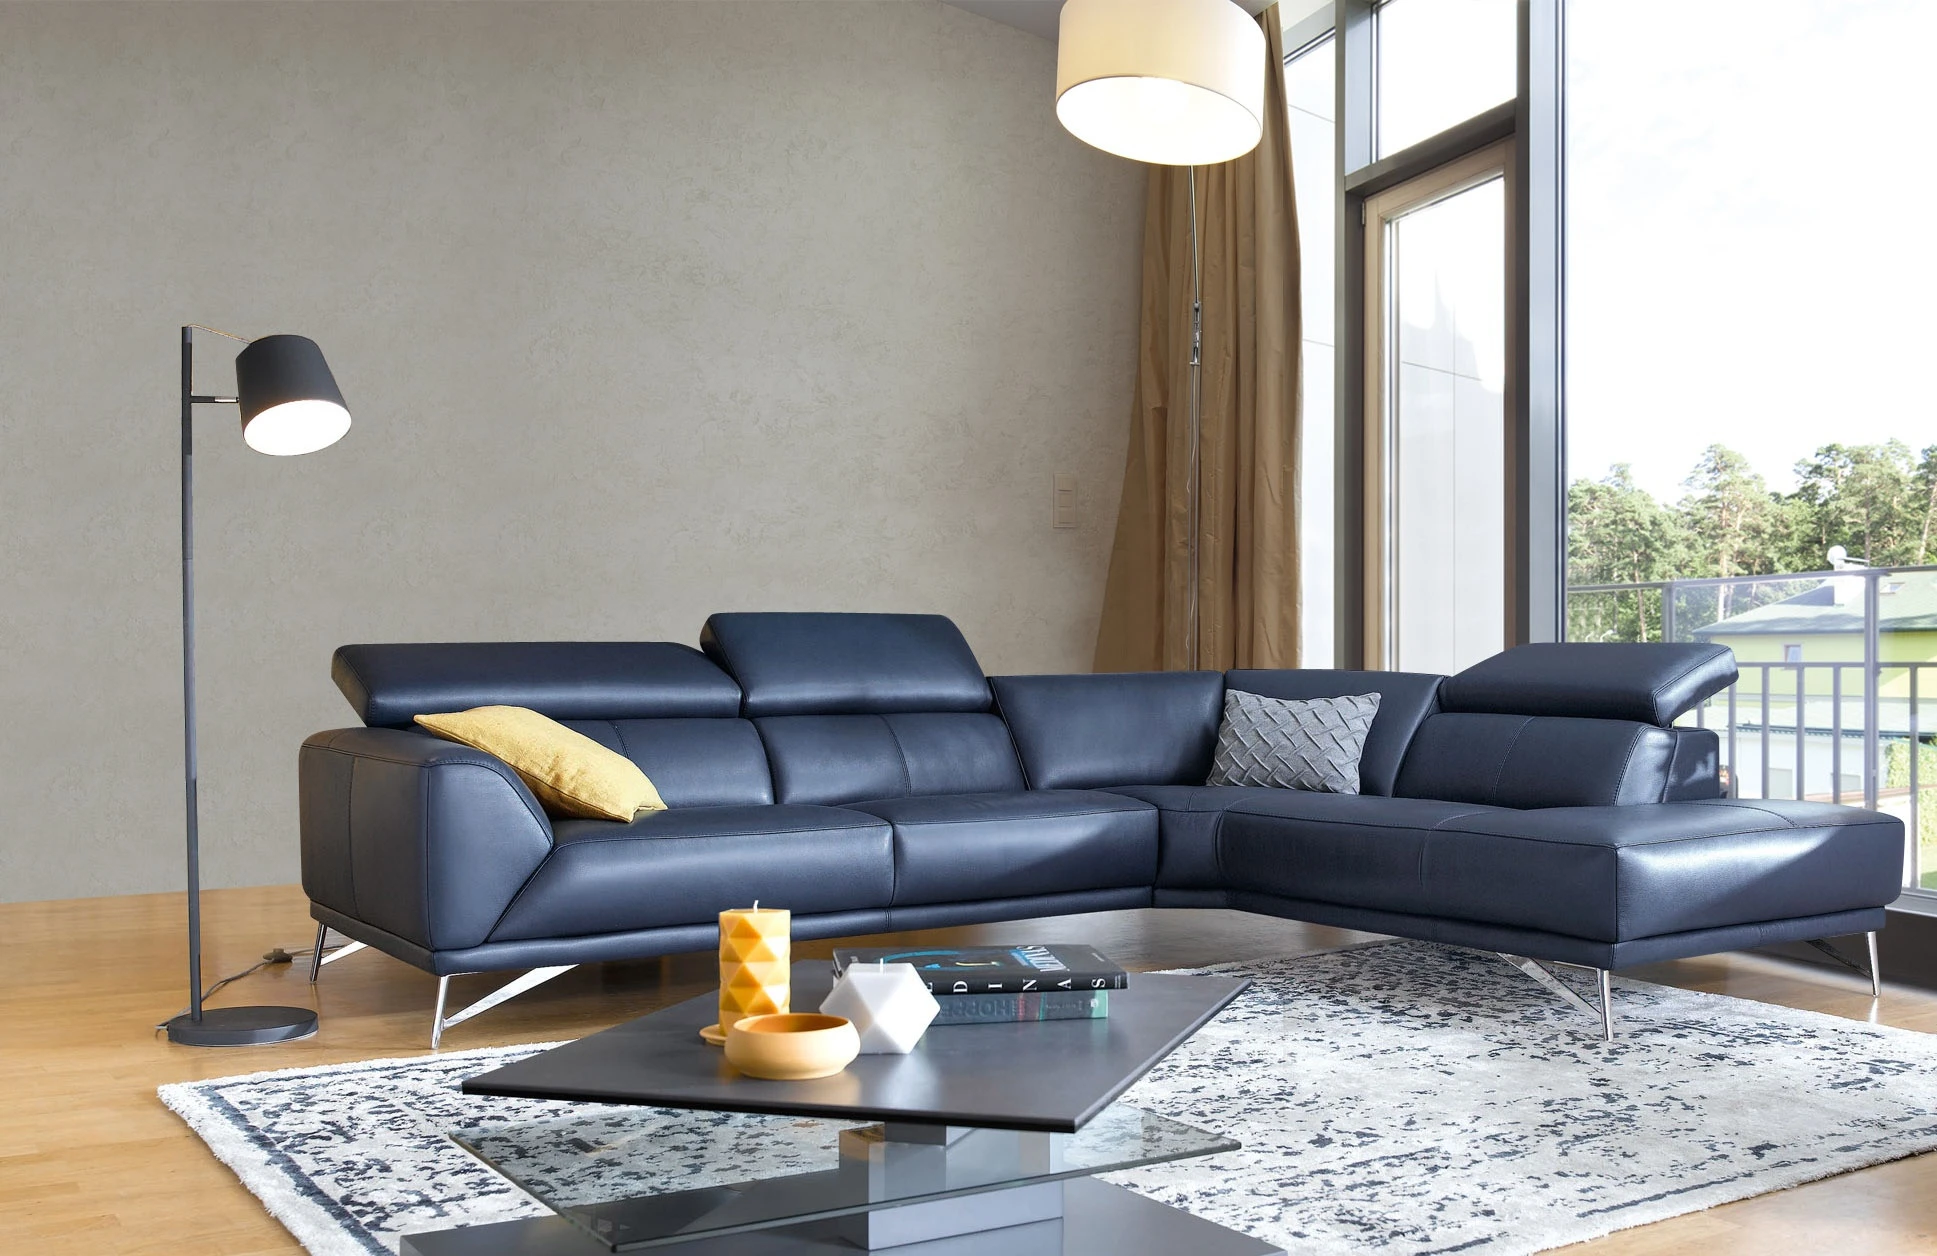 comfortable and nice foshan heated leather sofa living room furniture